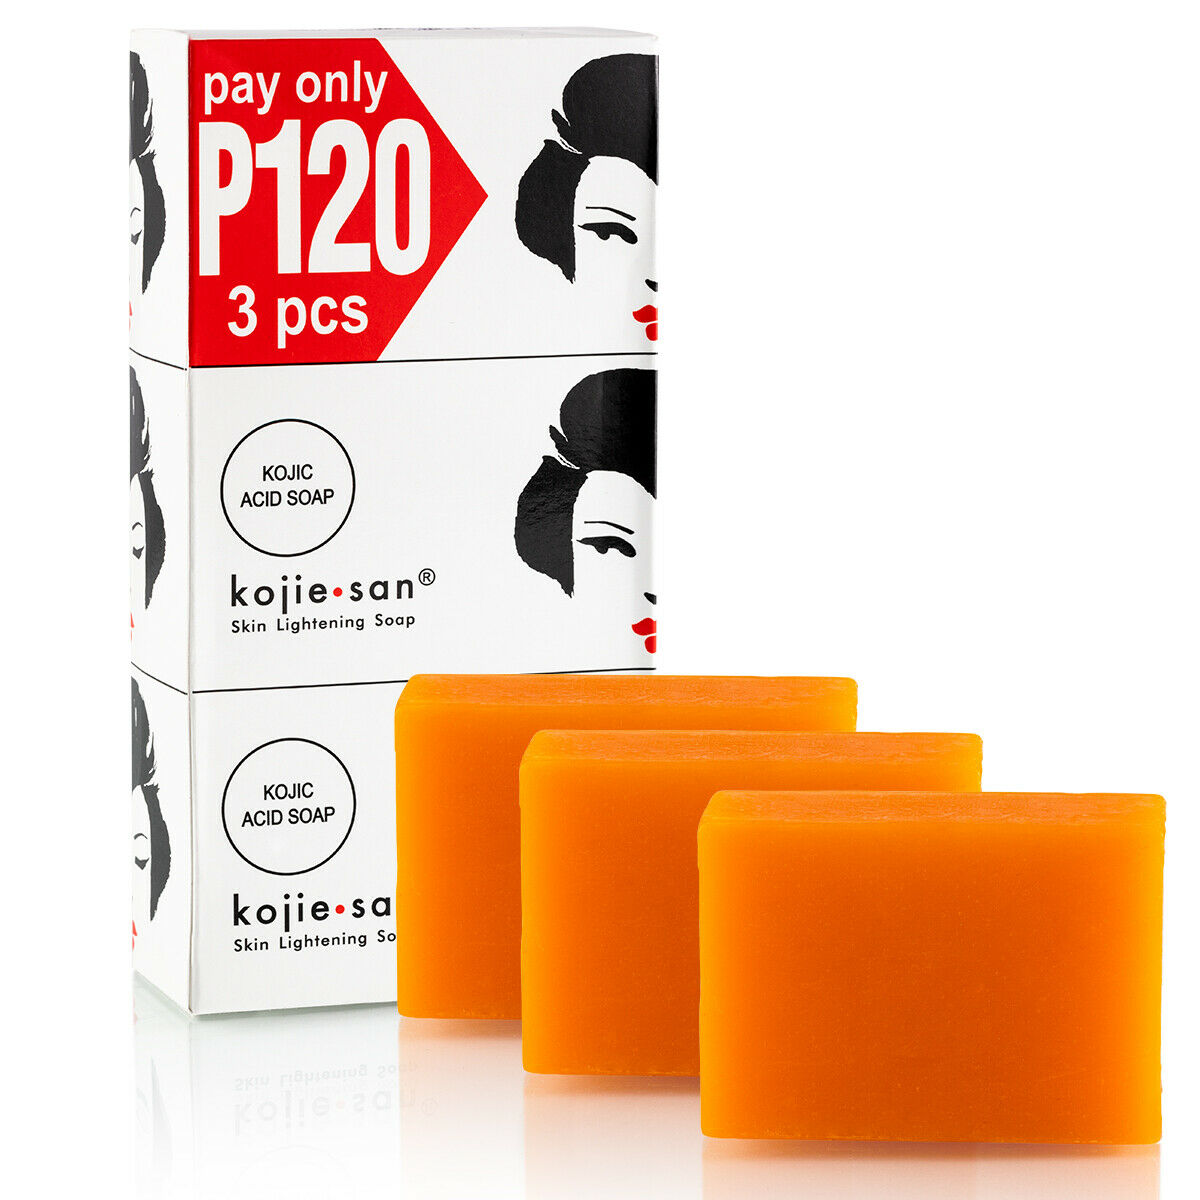 Kojie San Skin Lightening Kojic Acid Soap 3 Bars - 100g Each Bar - Super Savings